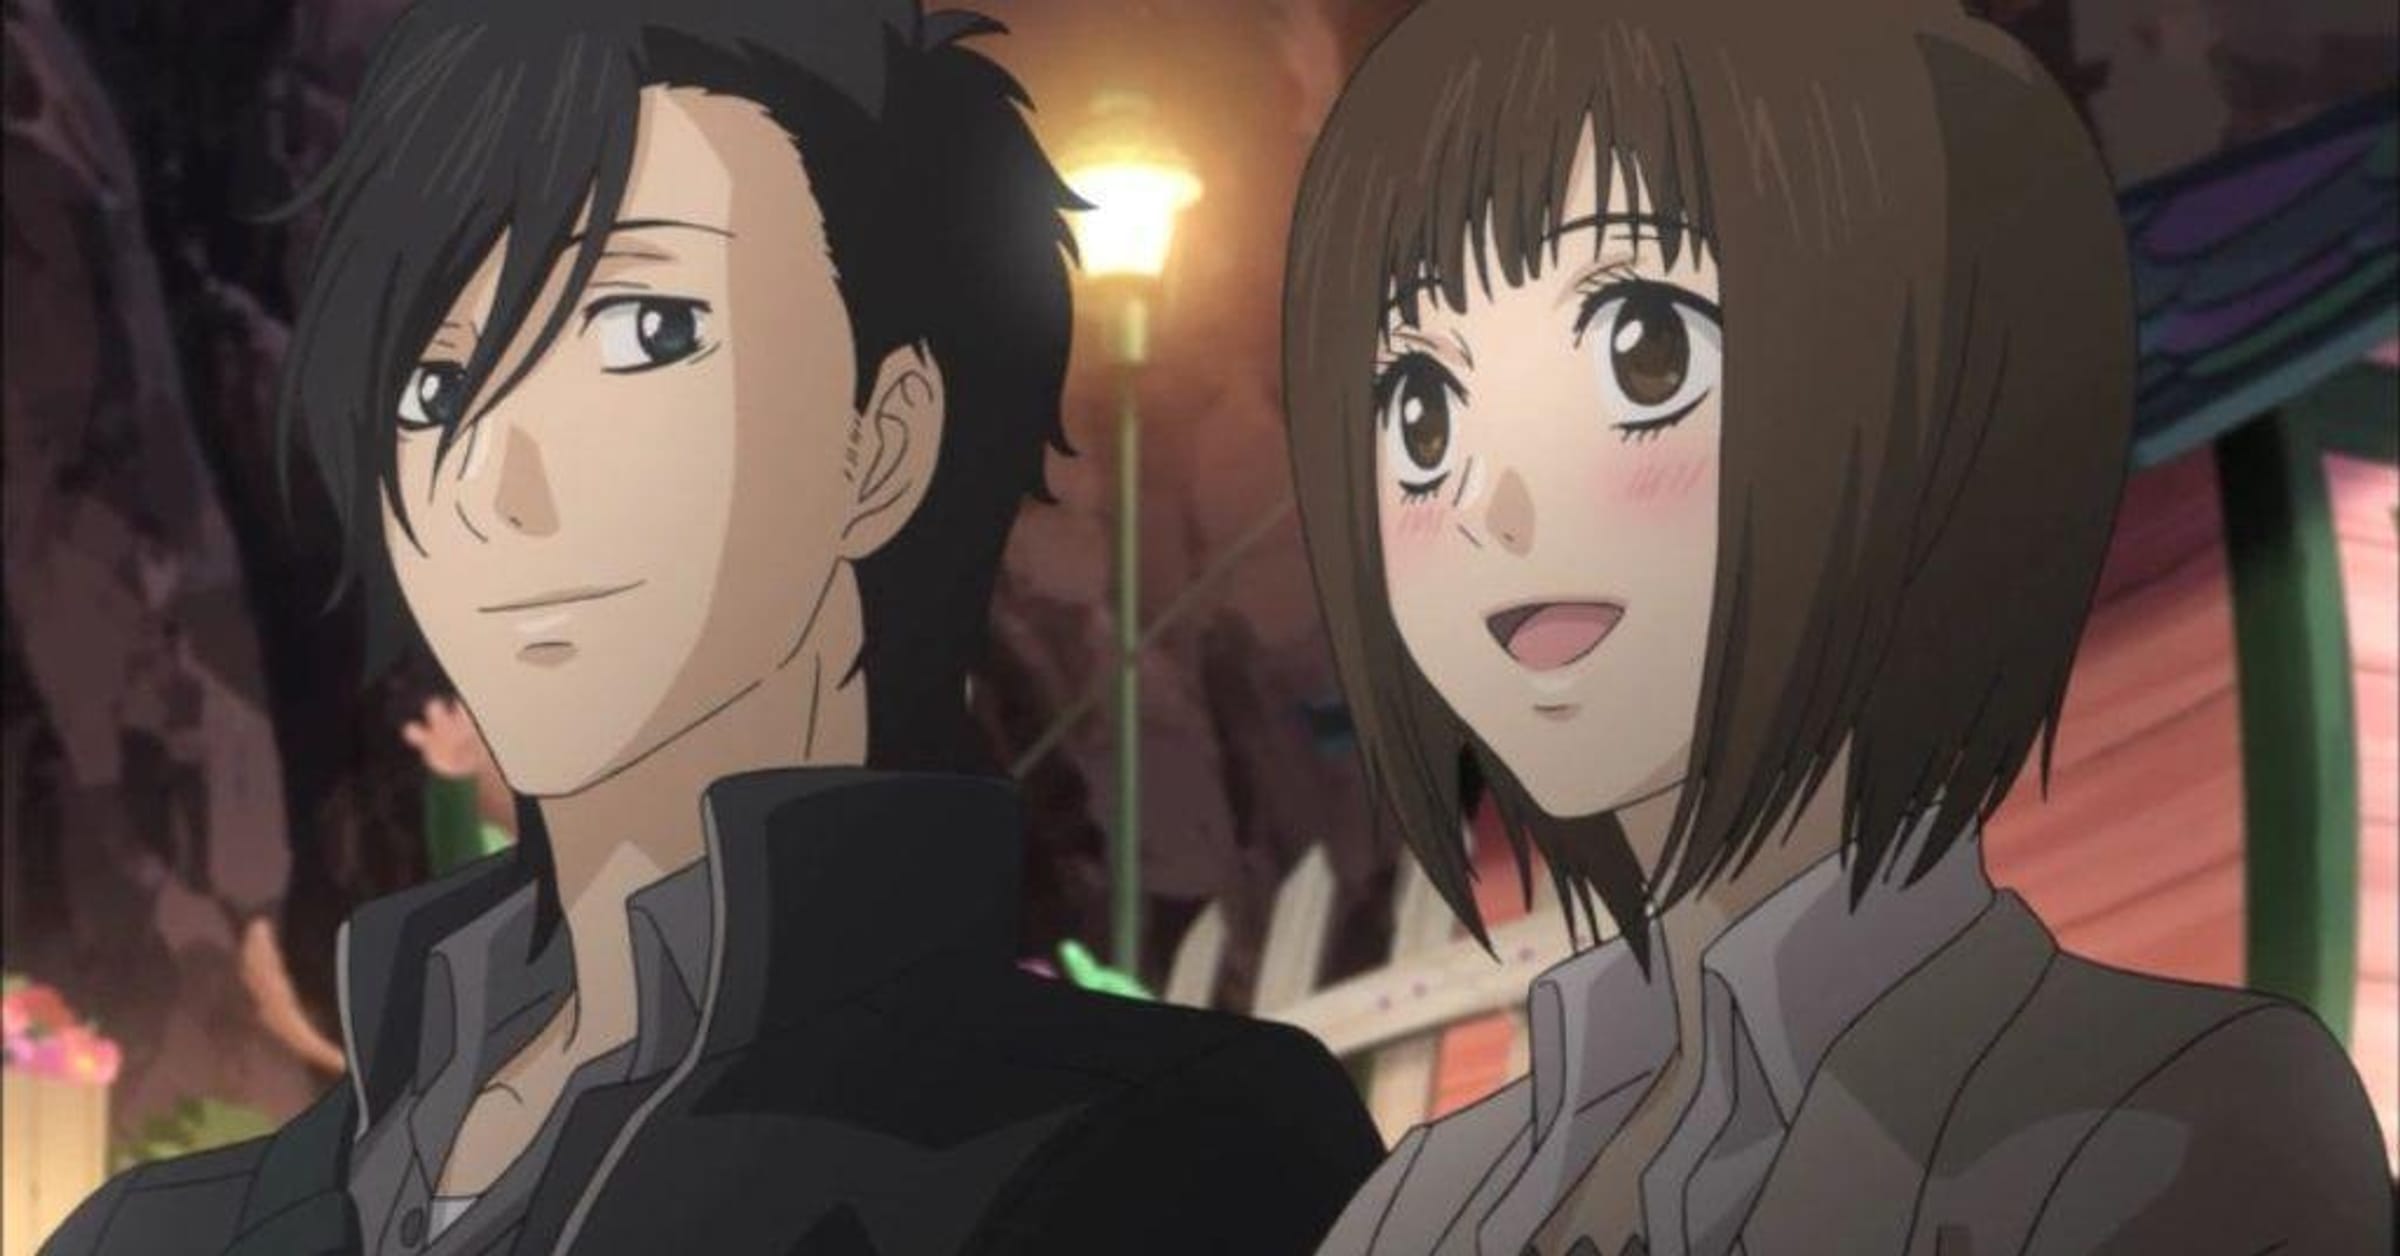 Ten Romance Anime Series Worth Watching